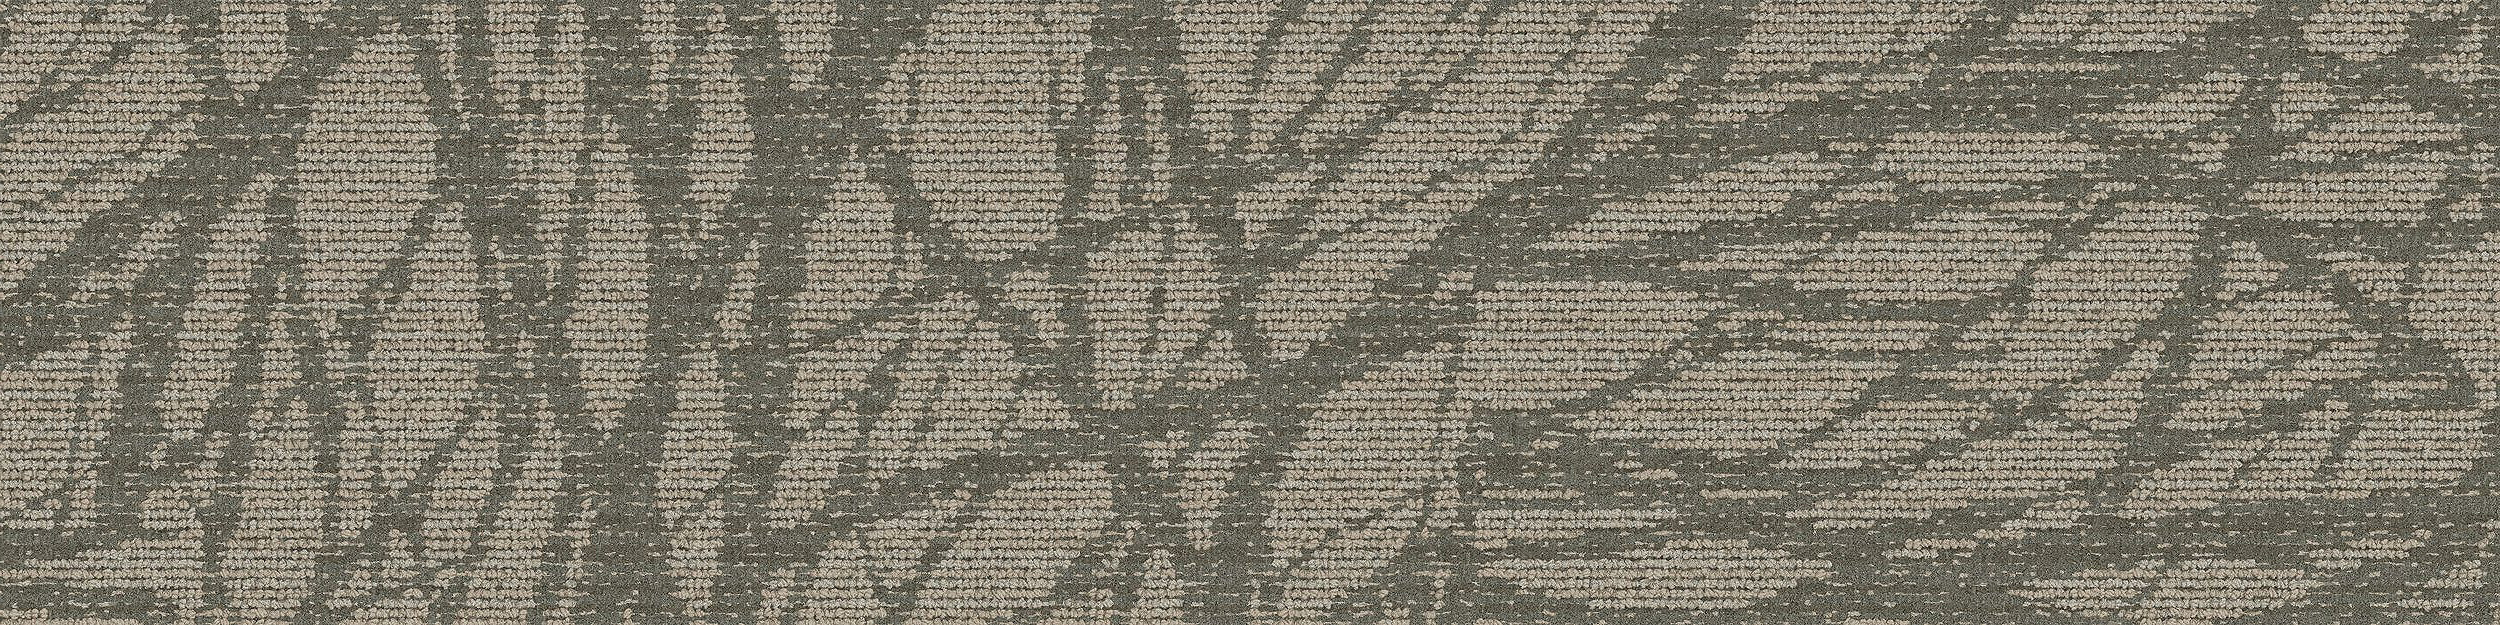 GN161 Carpet Tile In Pewter numéro d’image 4